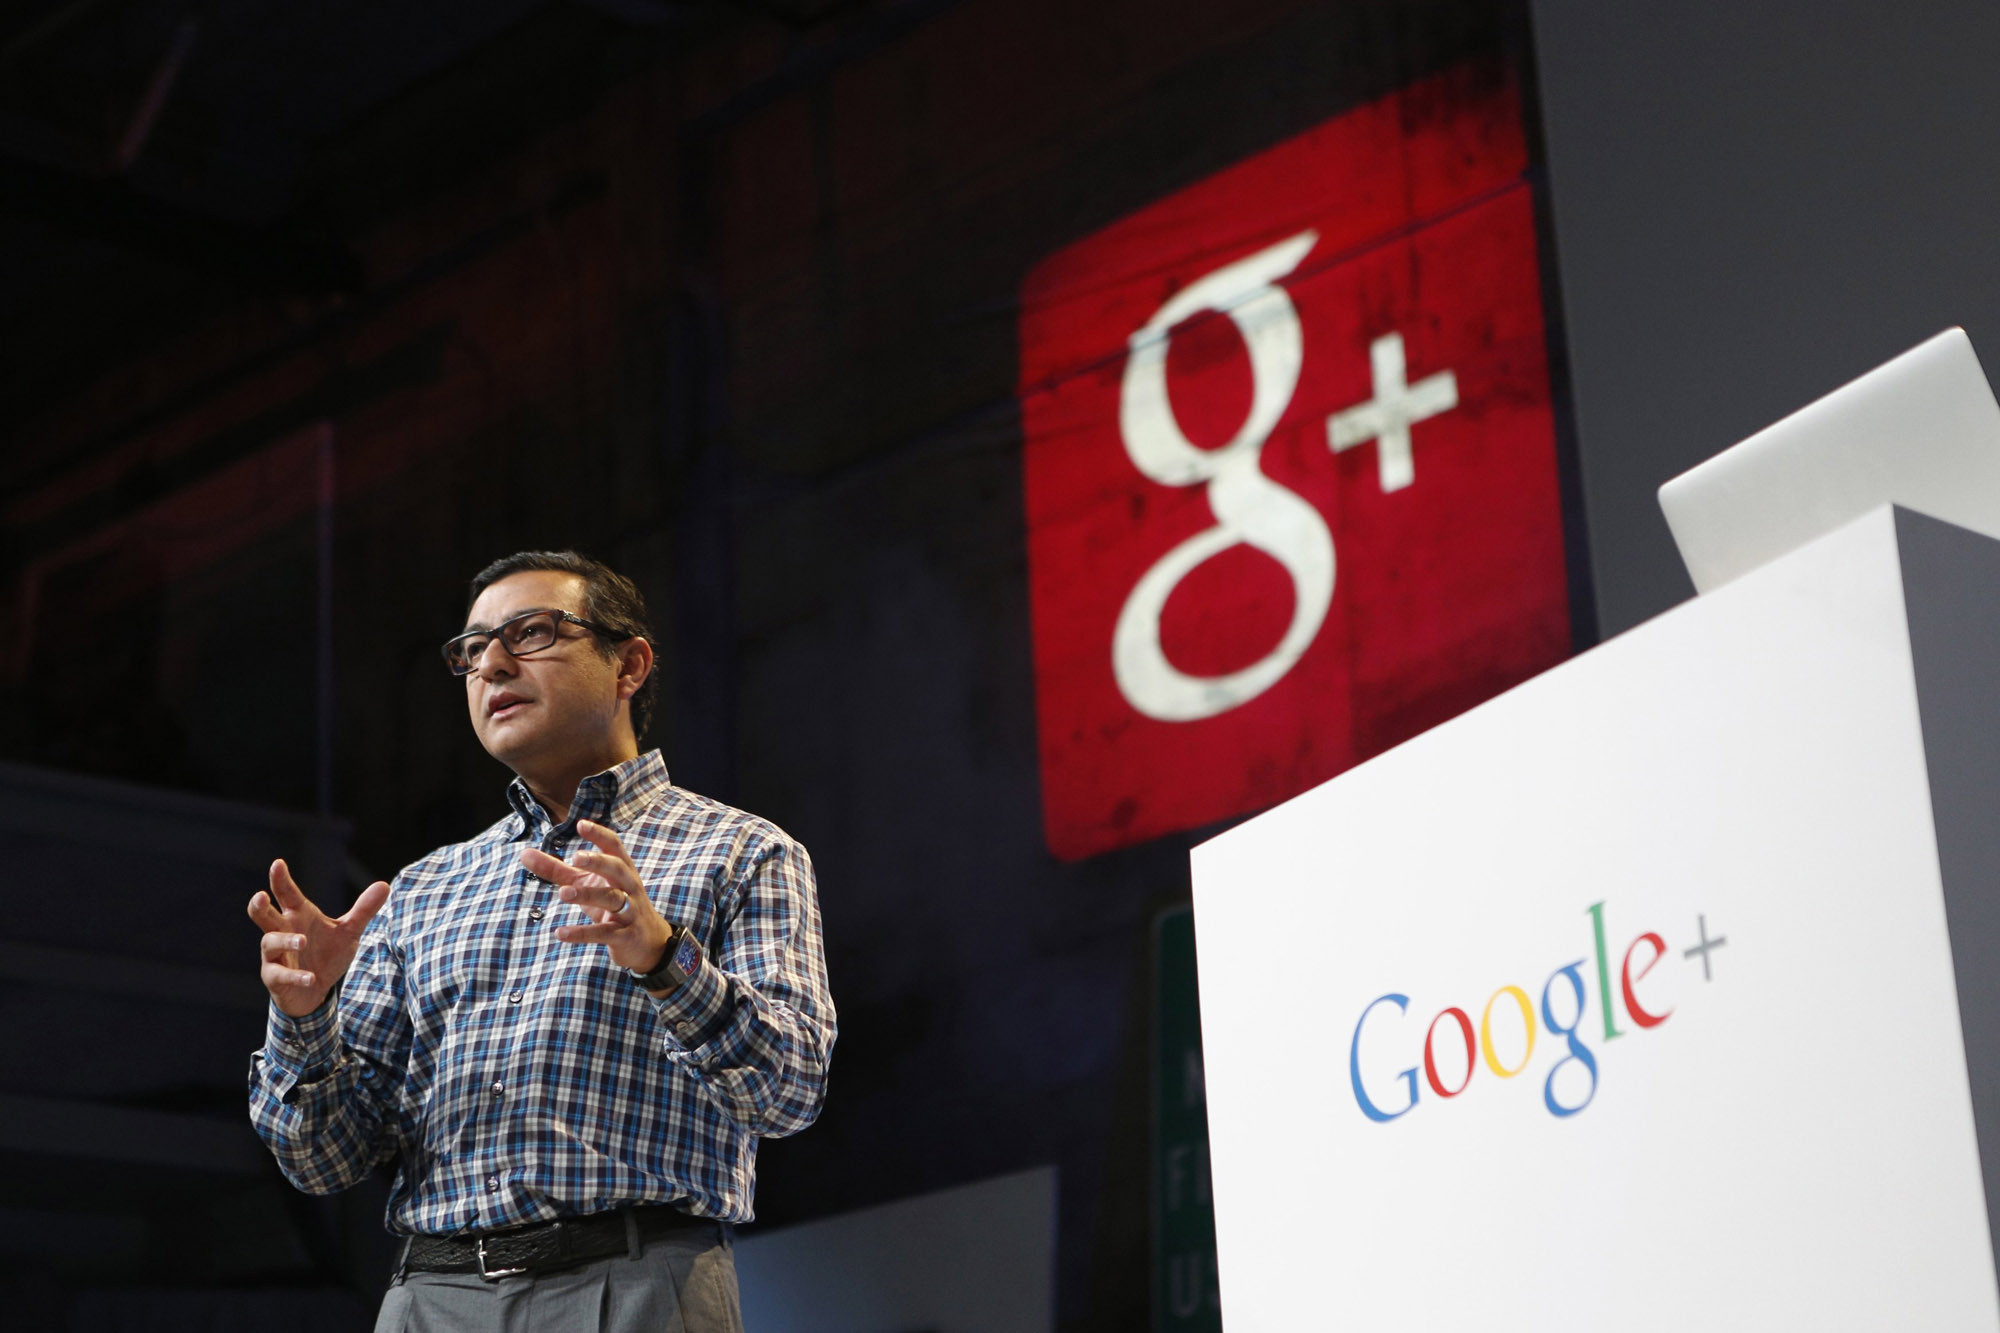 Senior VP of Engineering at Google Gundotra speaks at a Google event in San Francisco